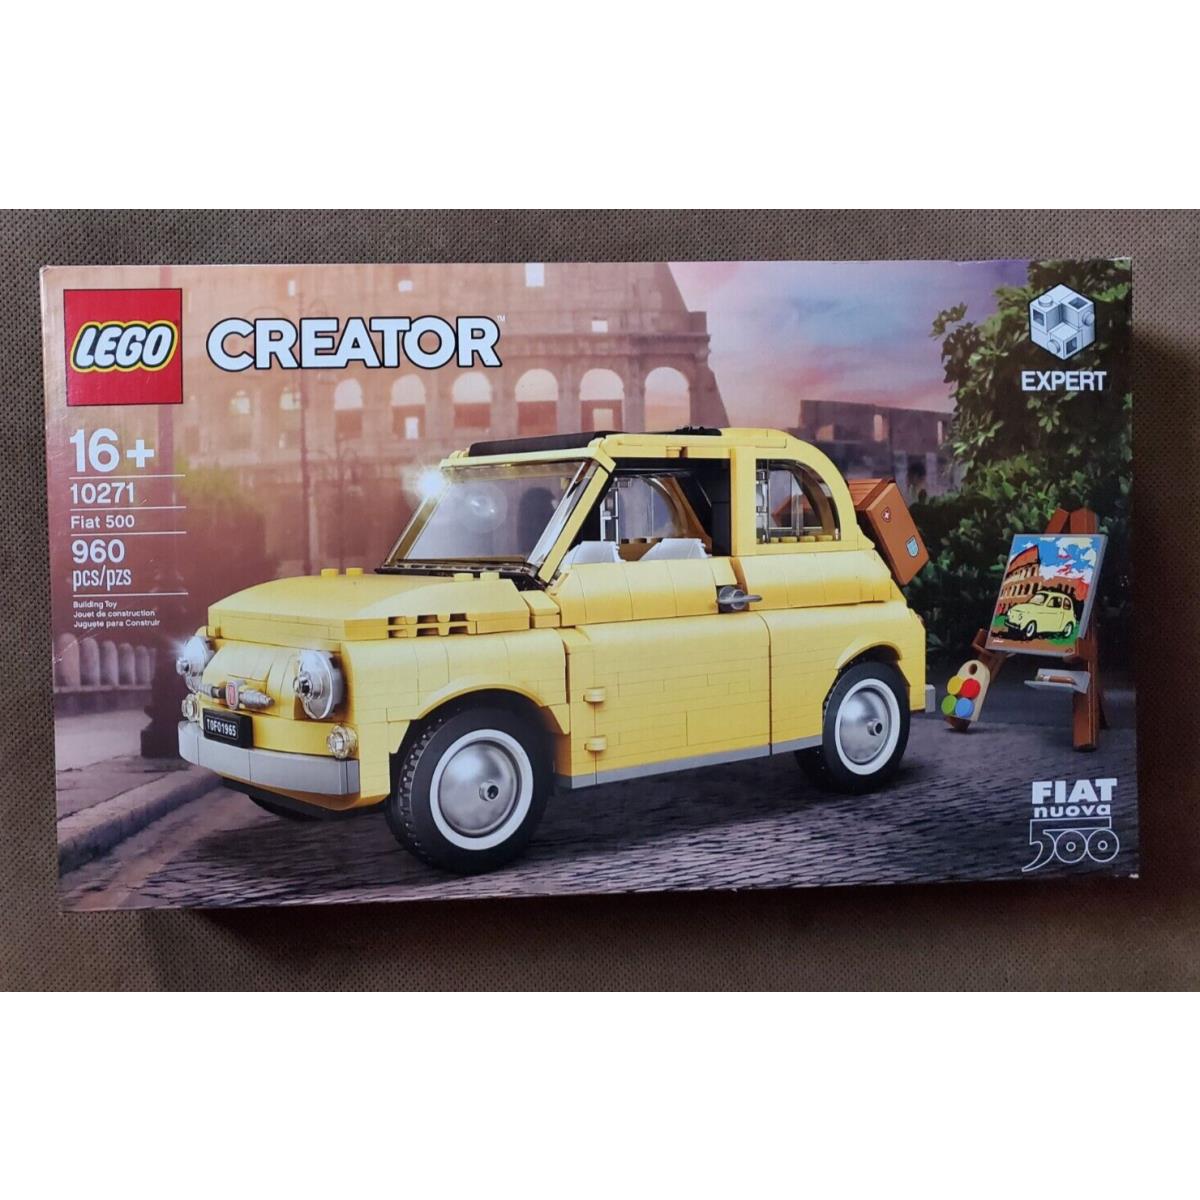 Lego Creator Expert 10271 Fiat 500 Building Set Retired